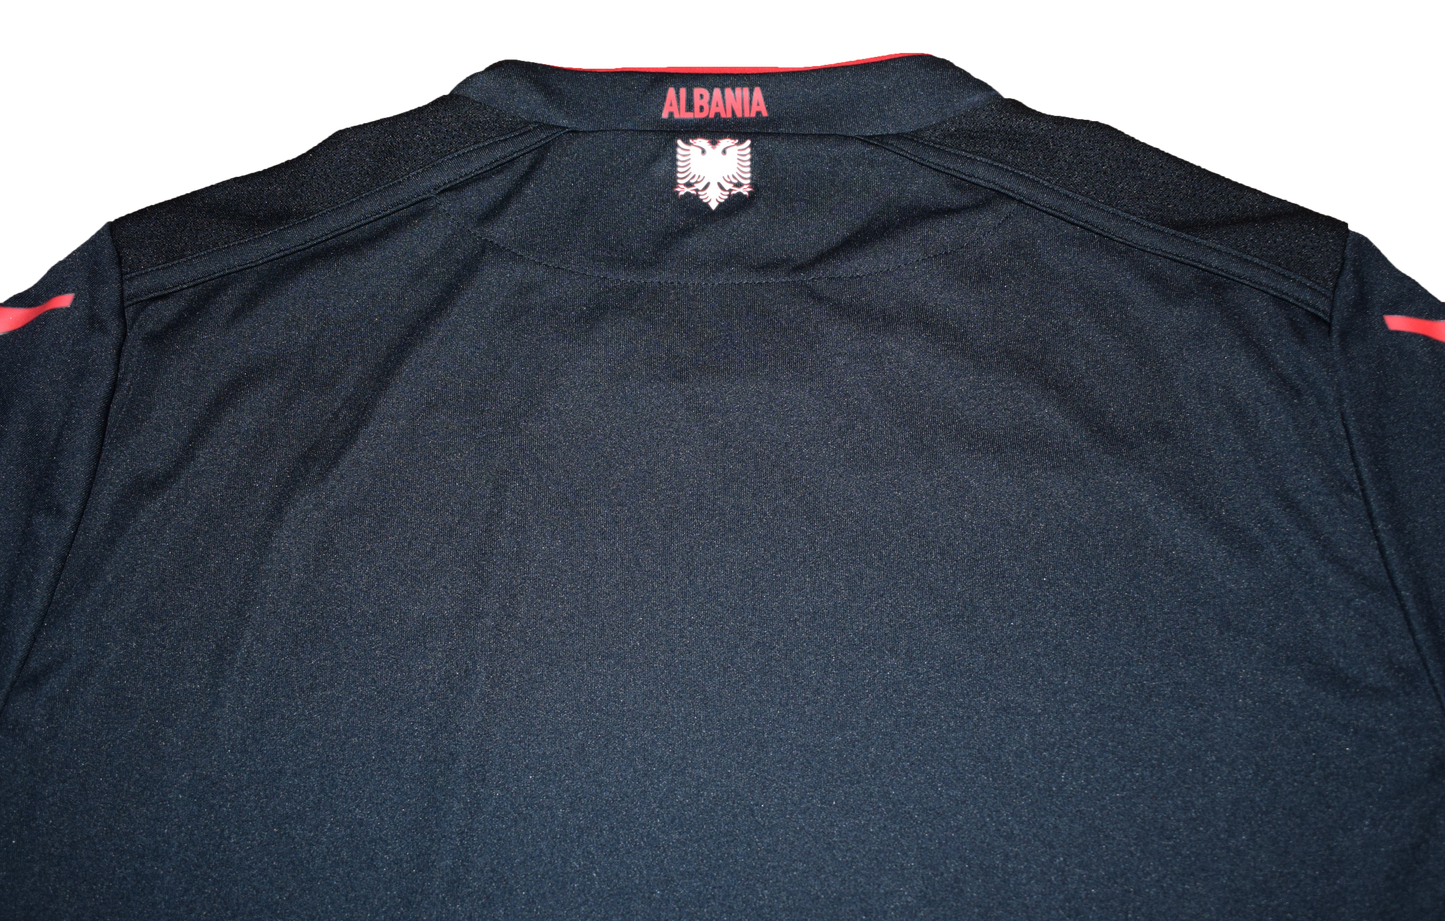 Albania 2016 Third kit Medium